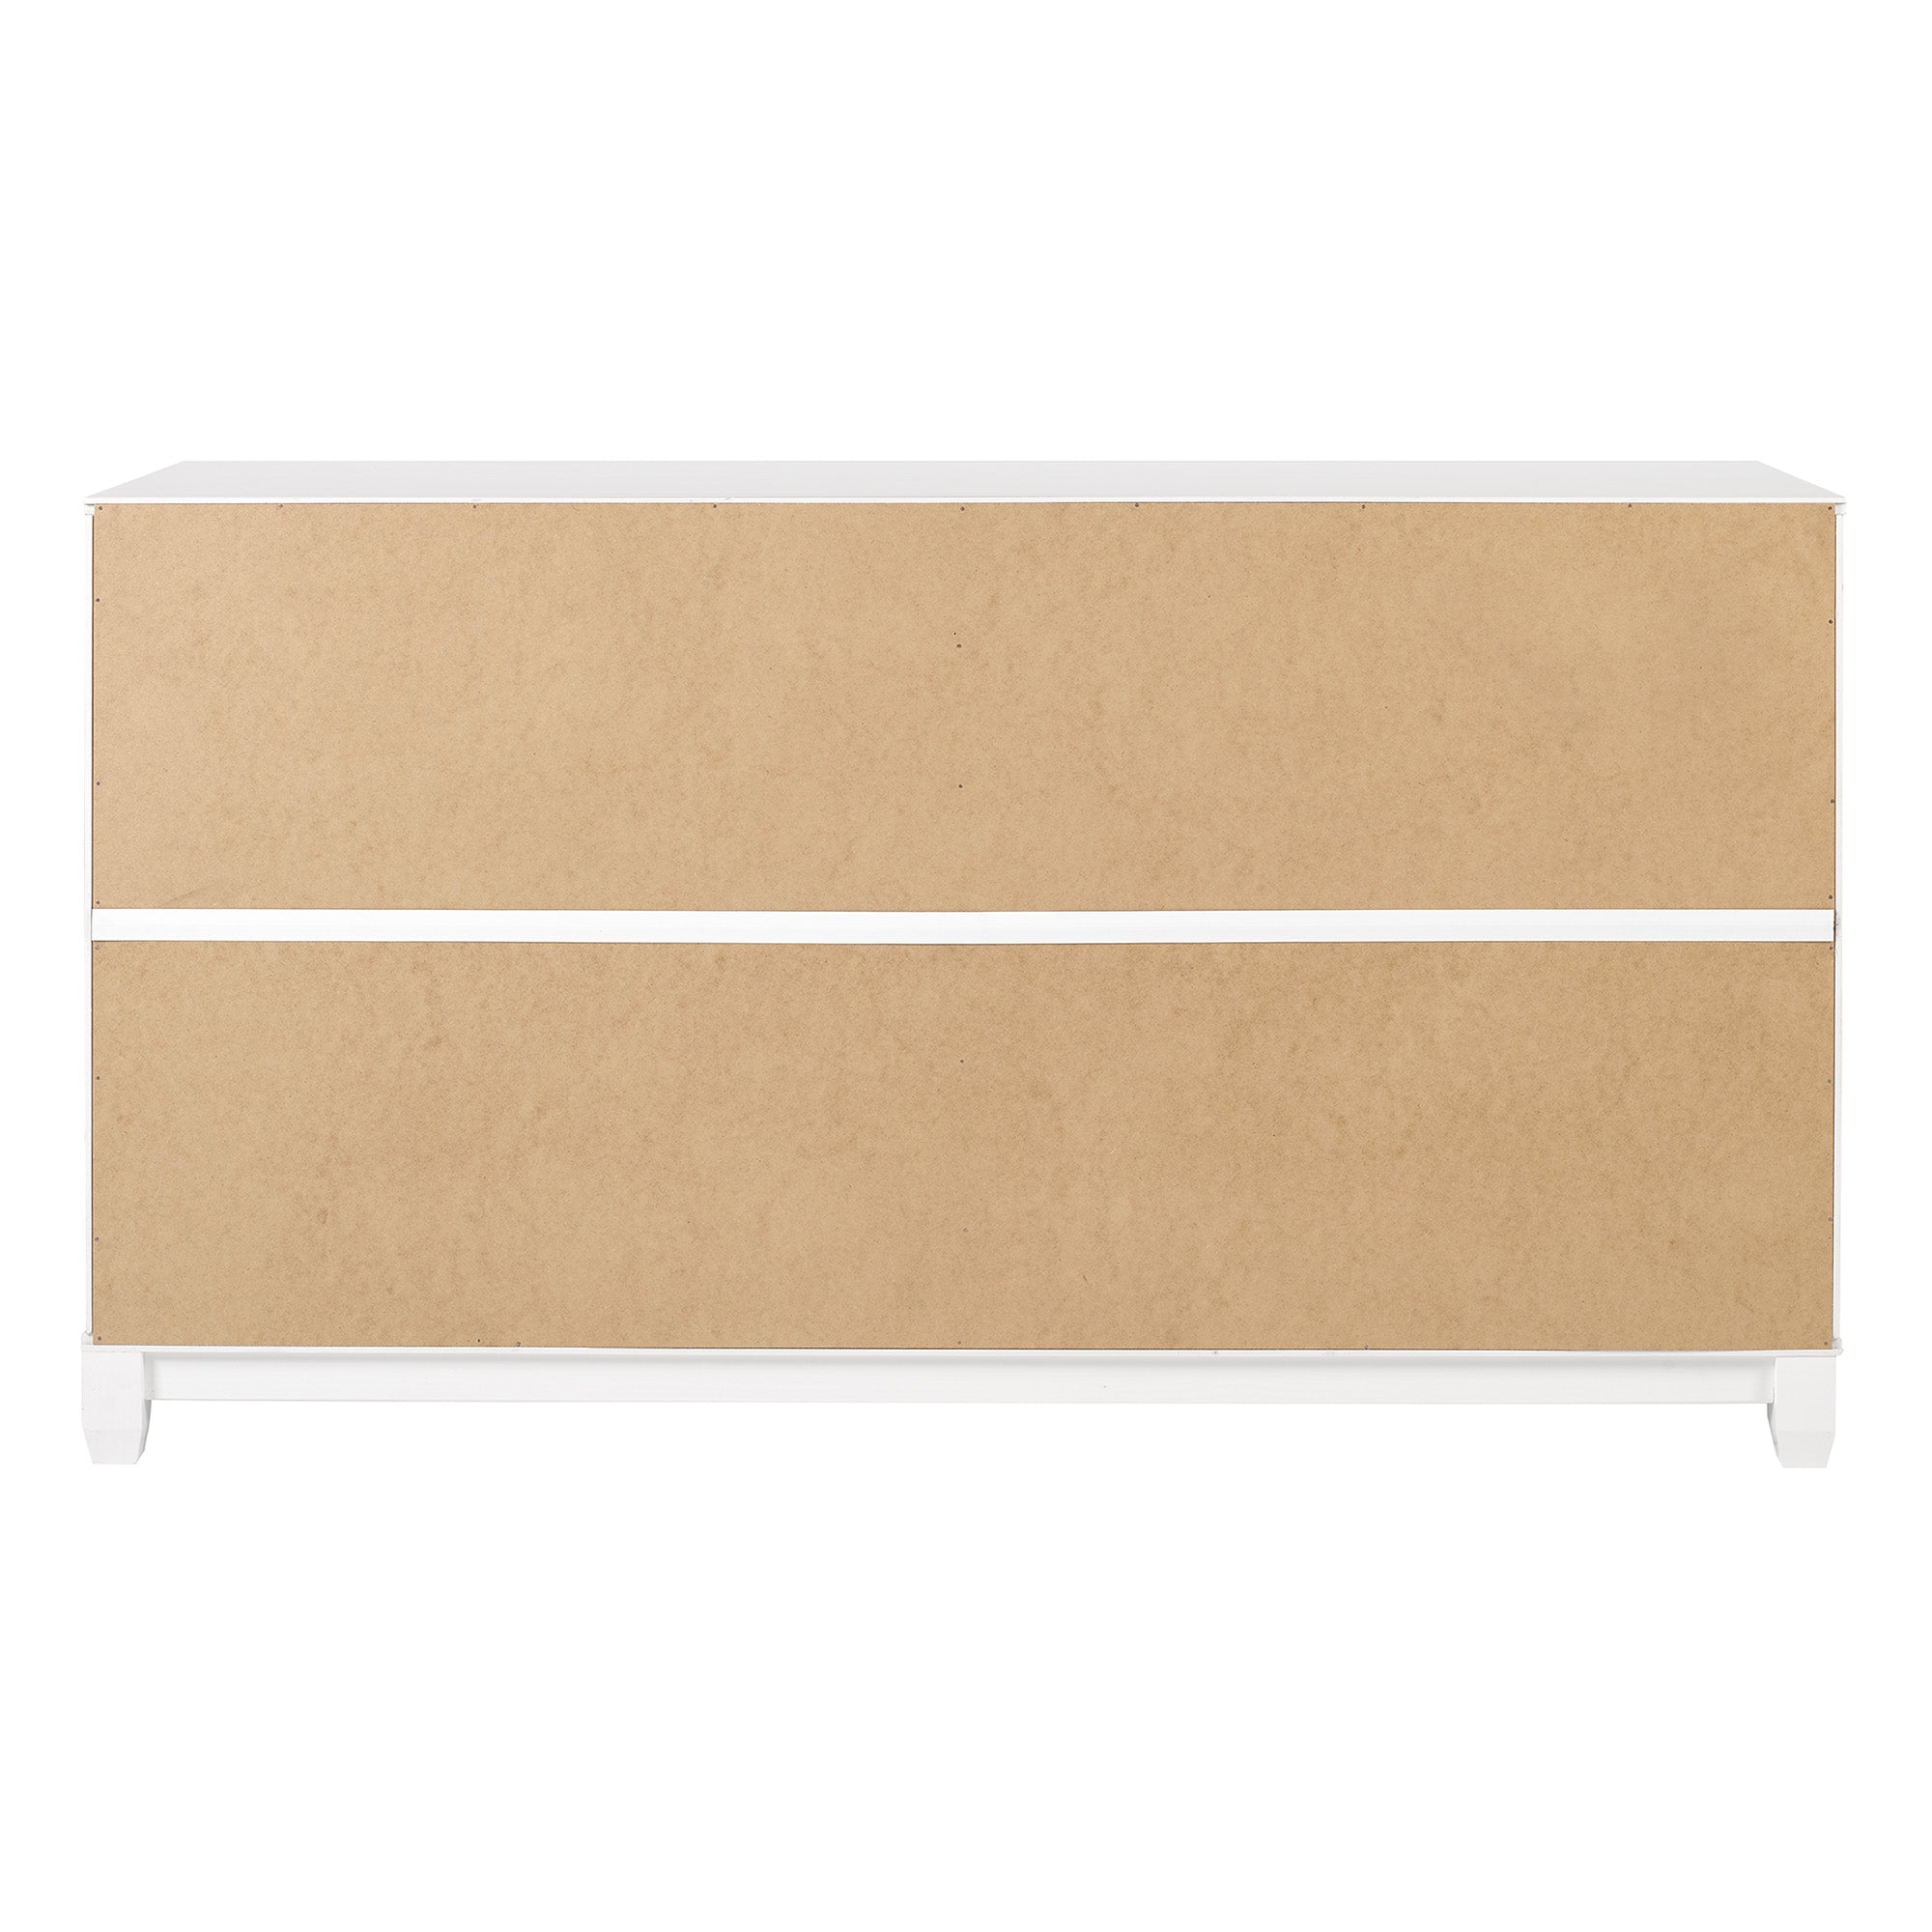 Modern Grooved Panel 6 Drawer Wood Dresser - East Shore Modern Home Furnishings